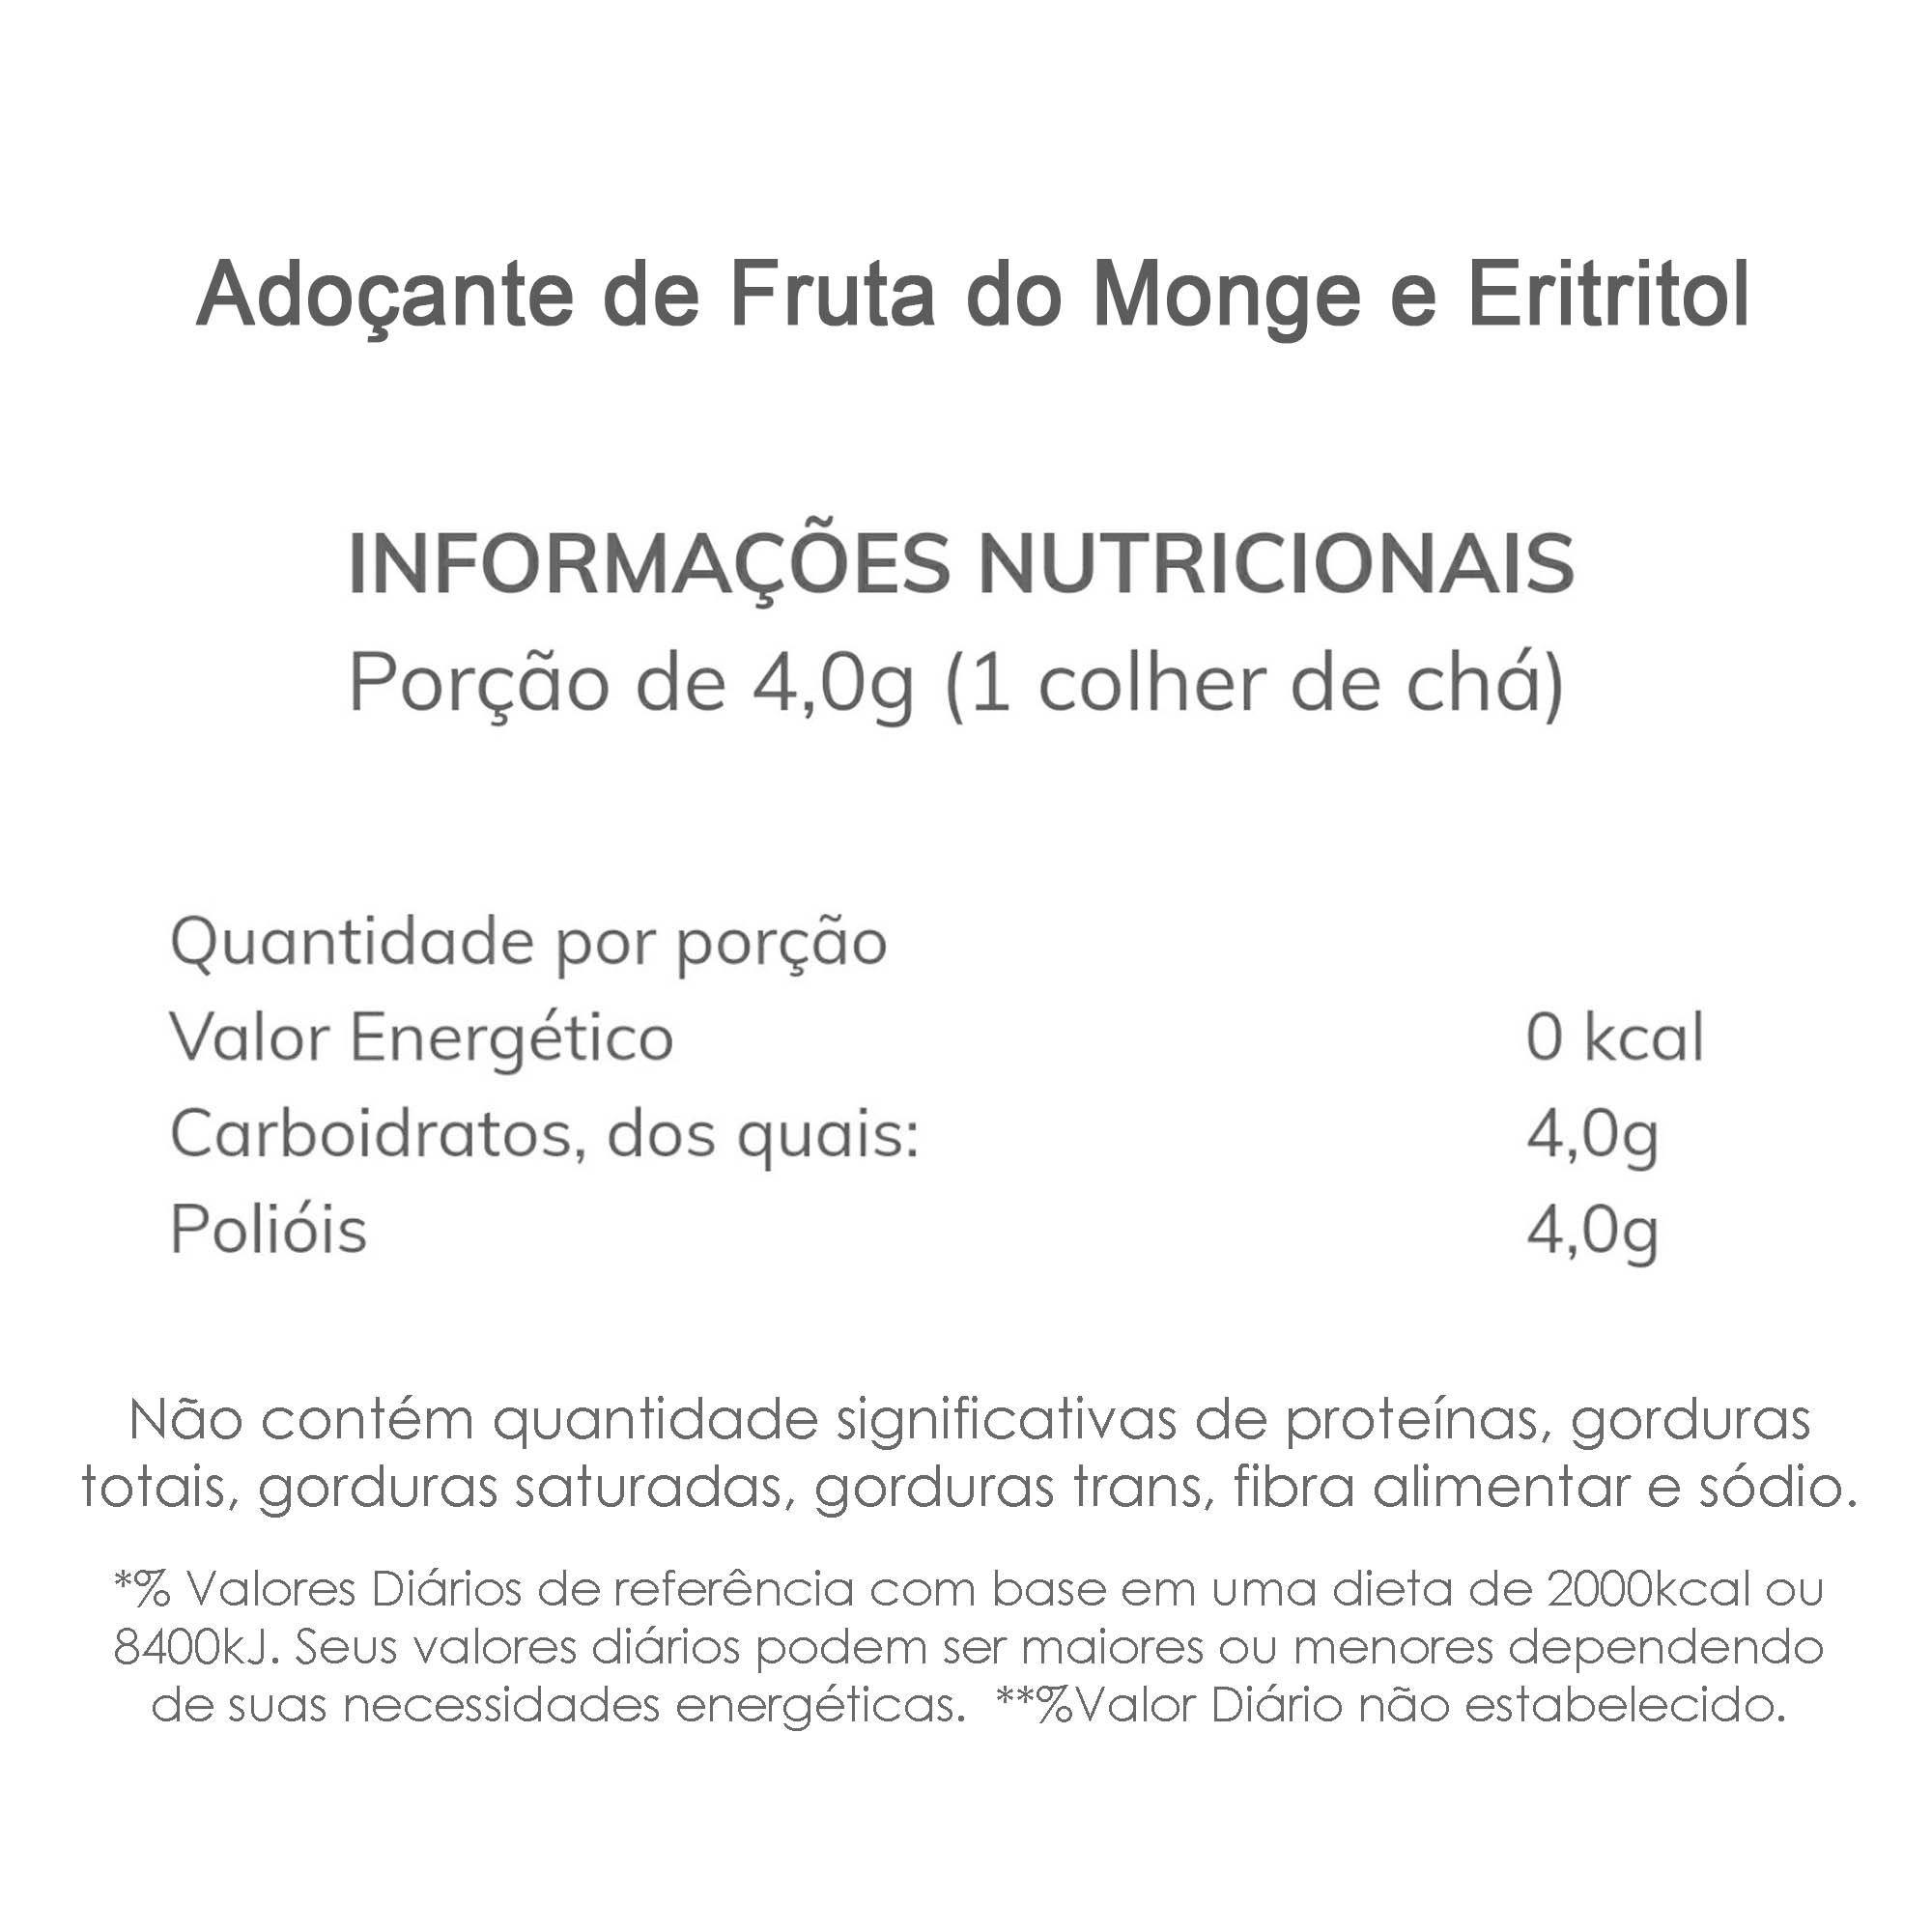 Adoçante de Fruta do Monge e Eritritol (Monk Fruit + Erythritol) 1 kg  - TLC Tudo Low Carb